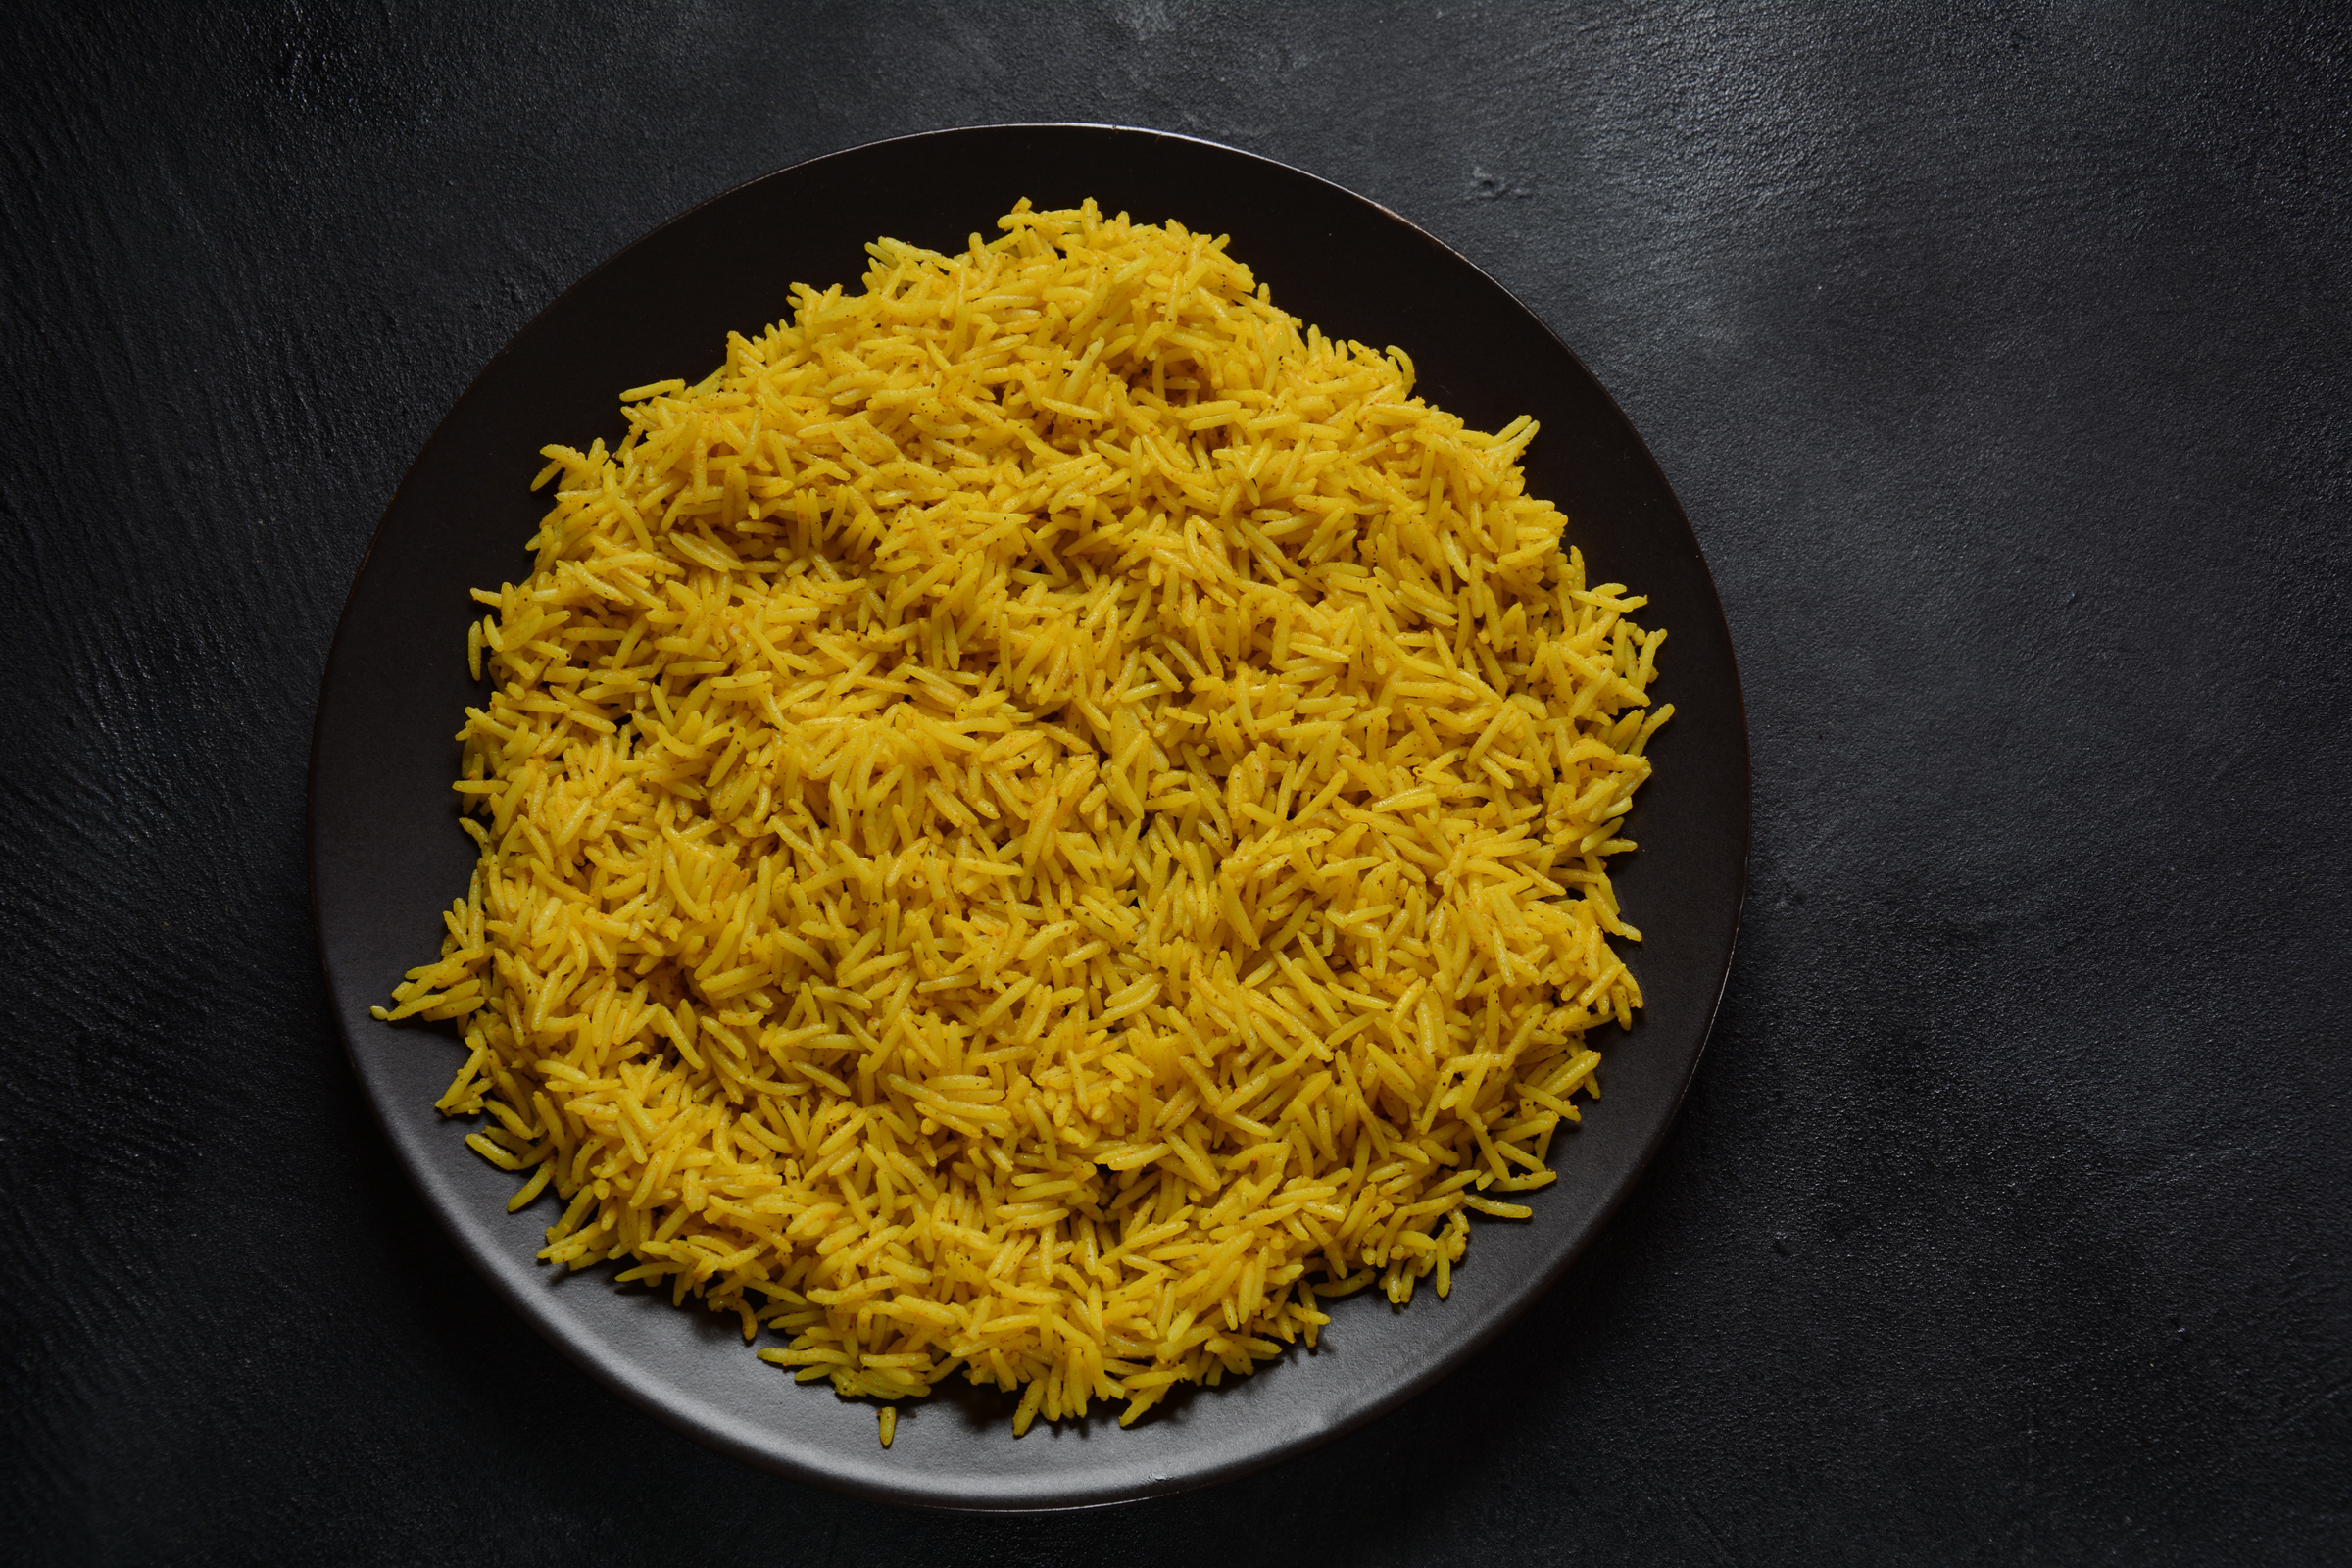 Yellow wild rice cooked with curcuma turmeric spice